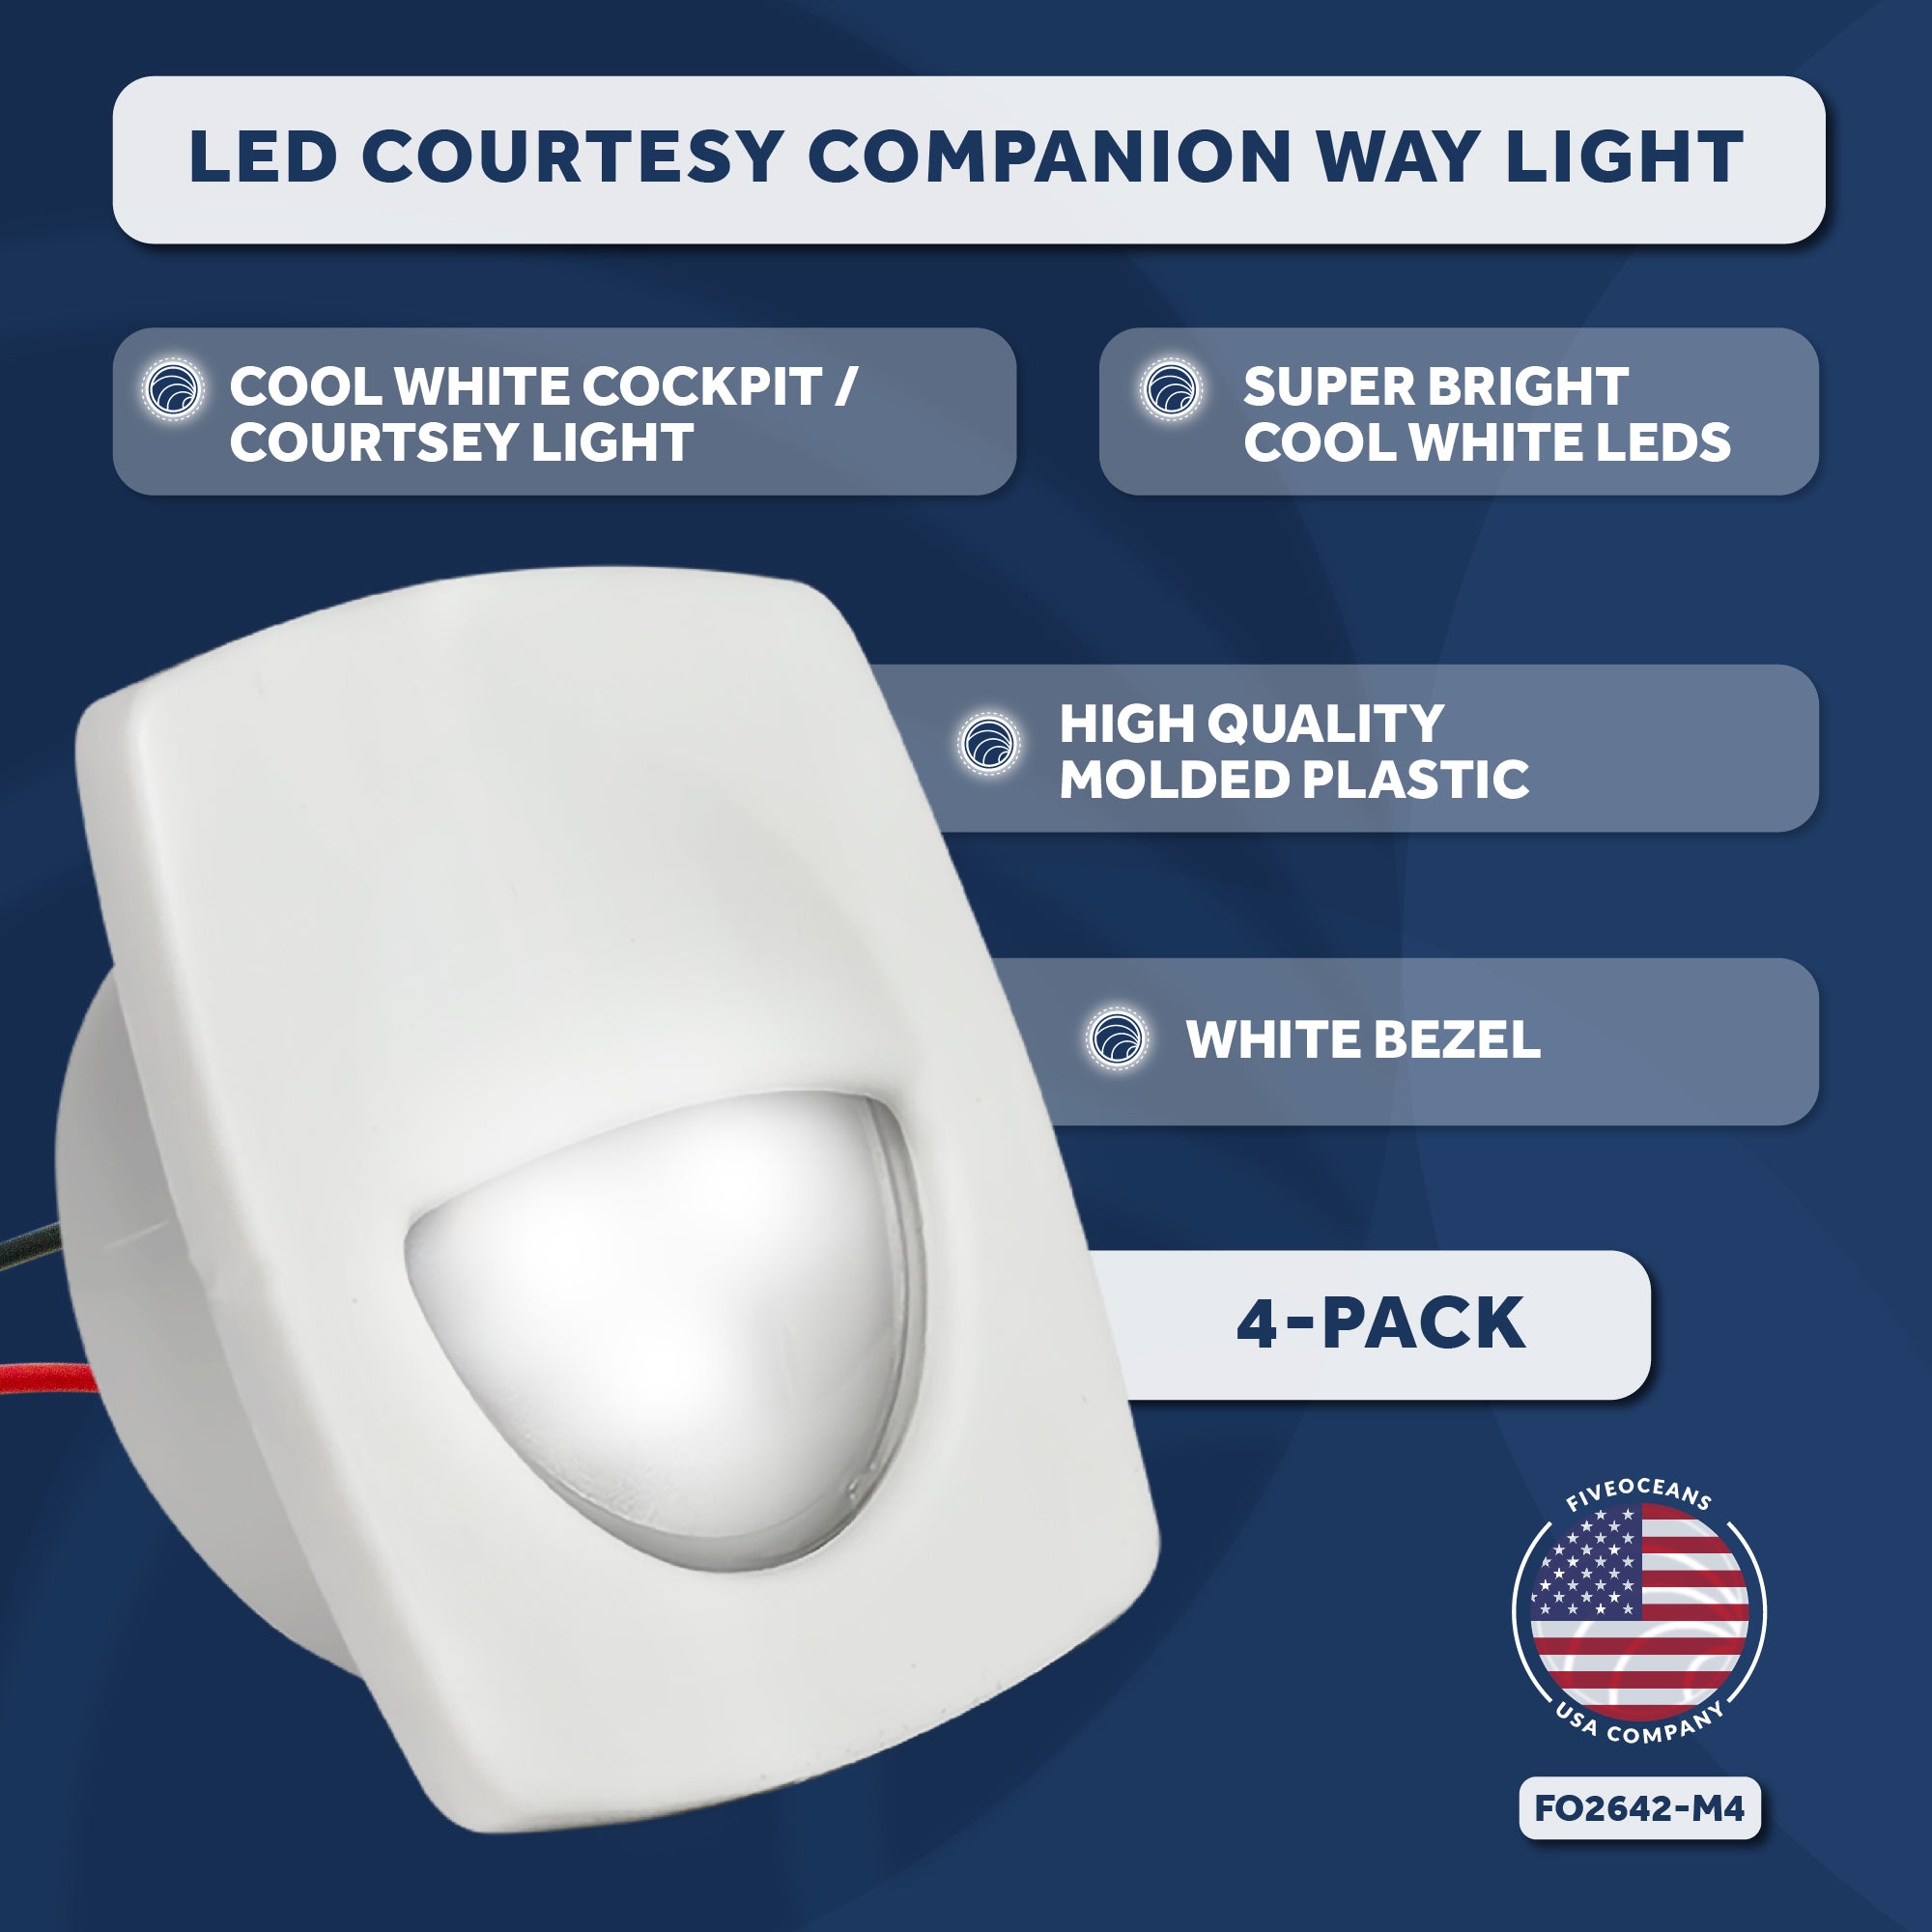 LED Courtesy Companion Way Light, White Square, Cool White, 4-Pack - FO2642-M4